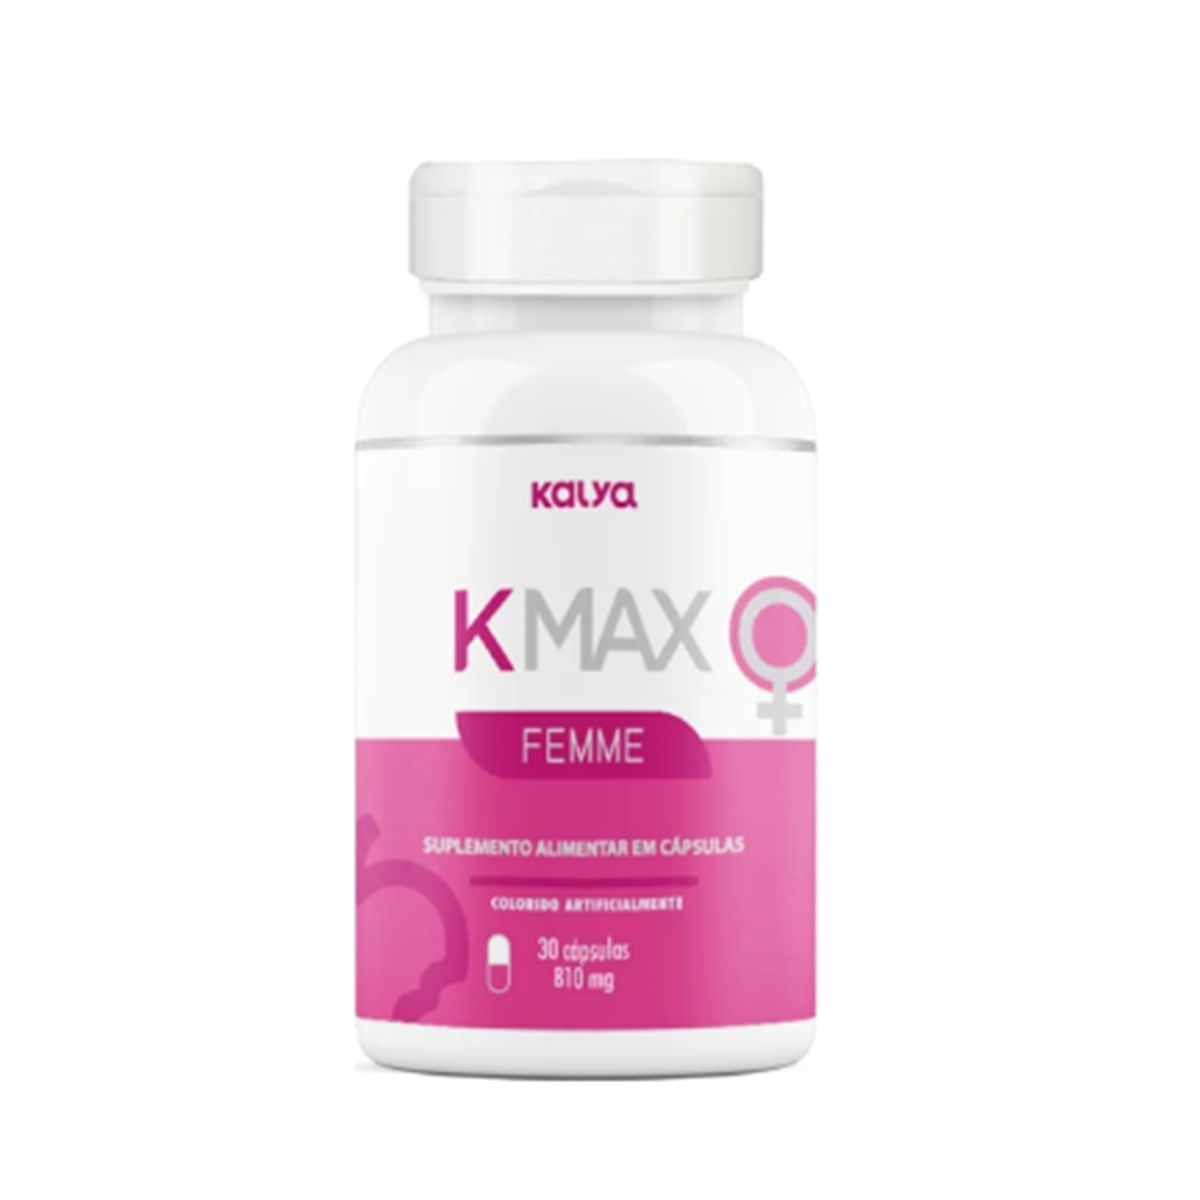 Kmax Libidus Suplemento Vitamínico Mineral para Mulheres 30 Cápsulas Kalya